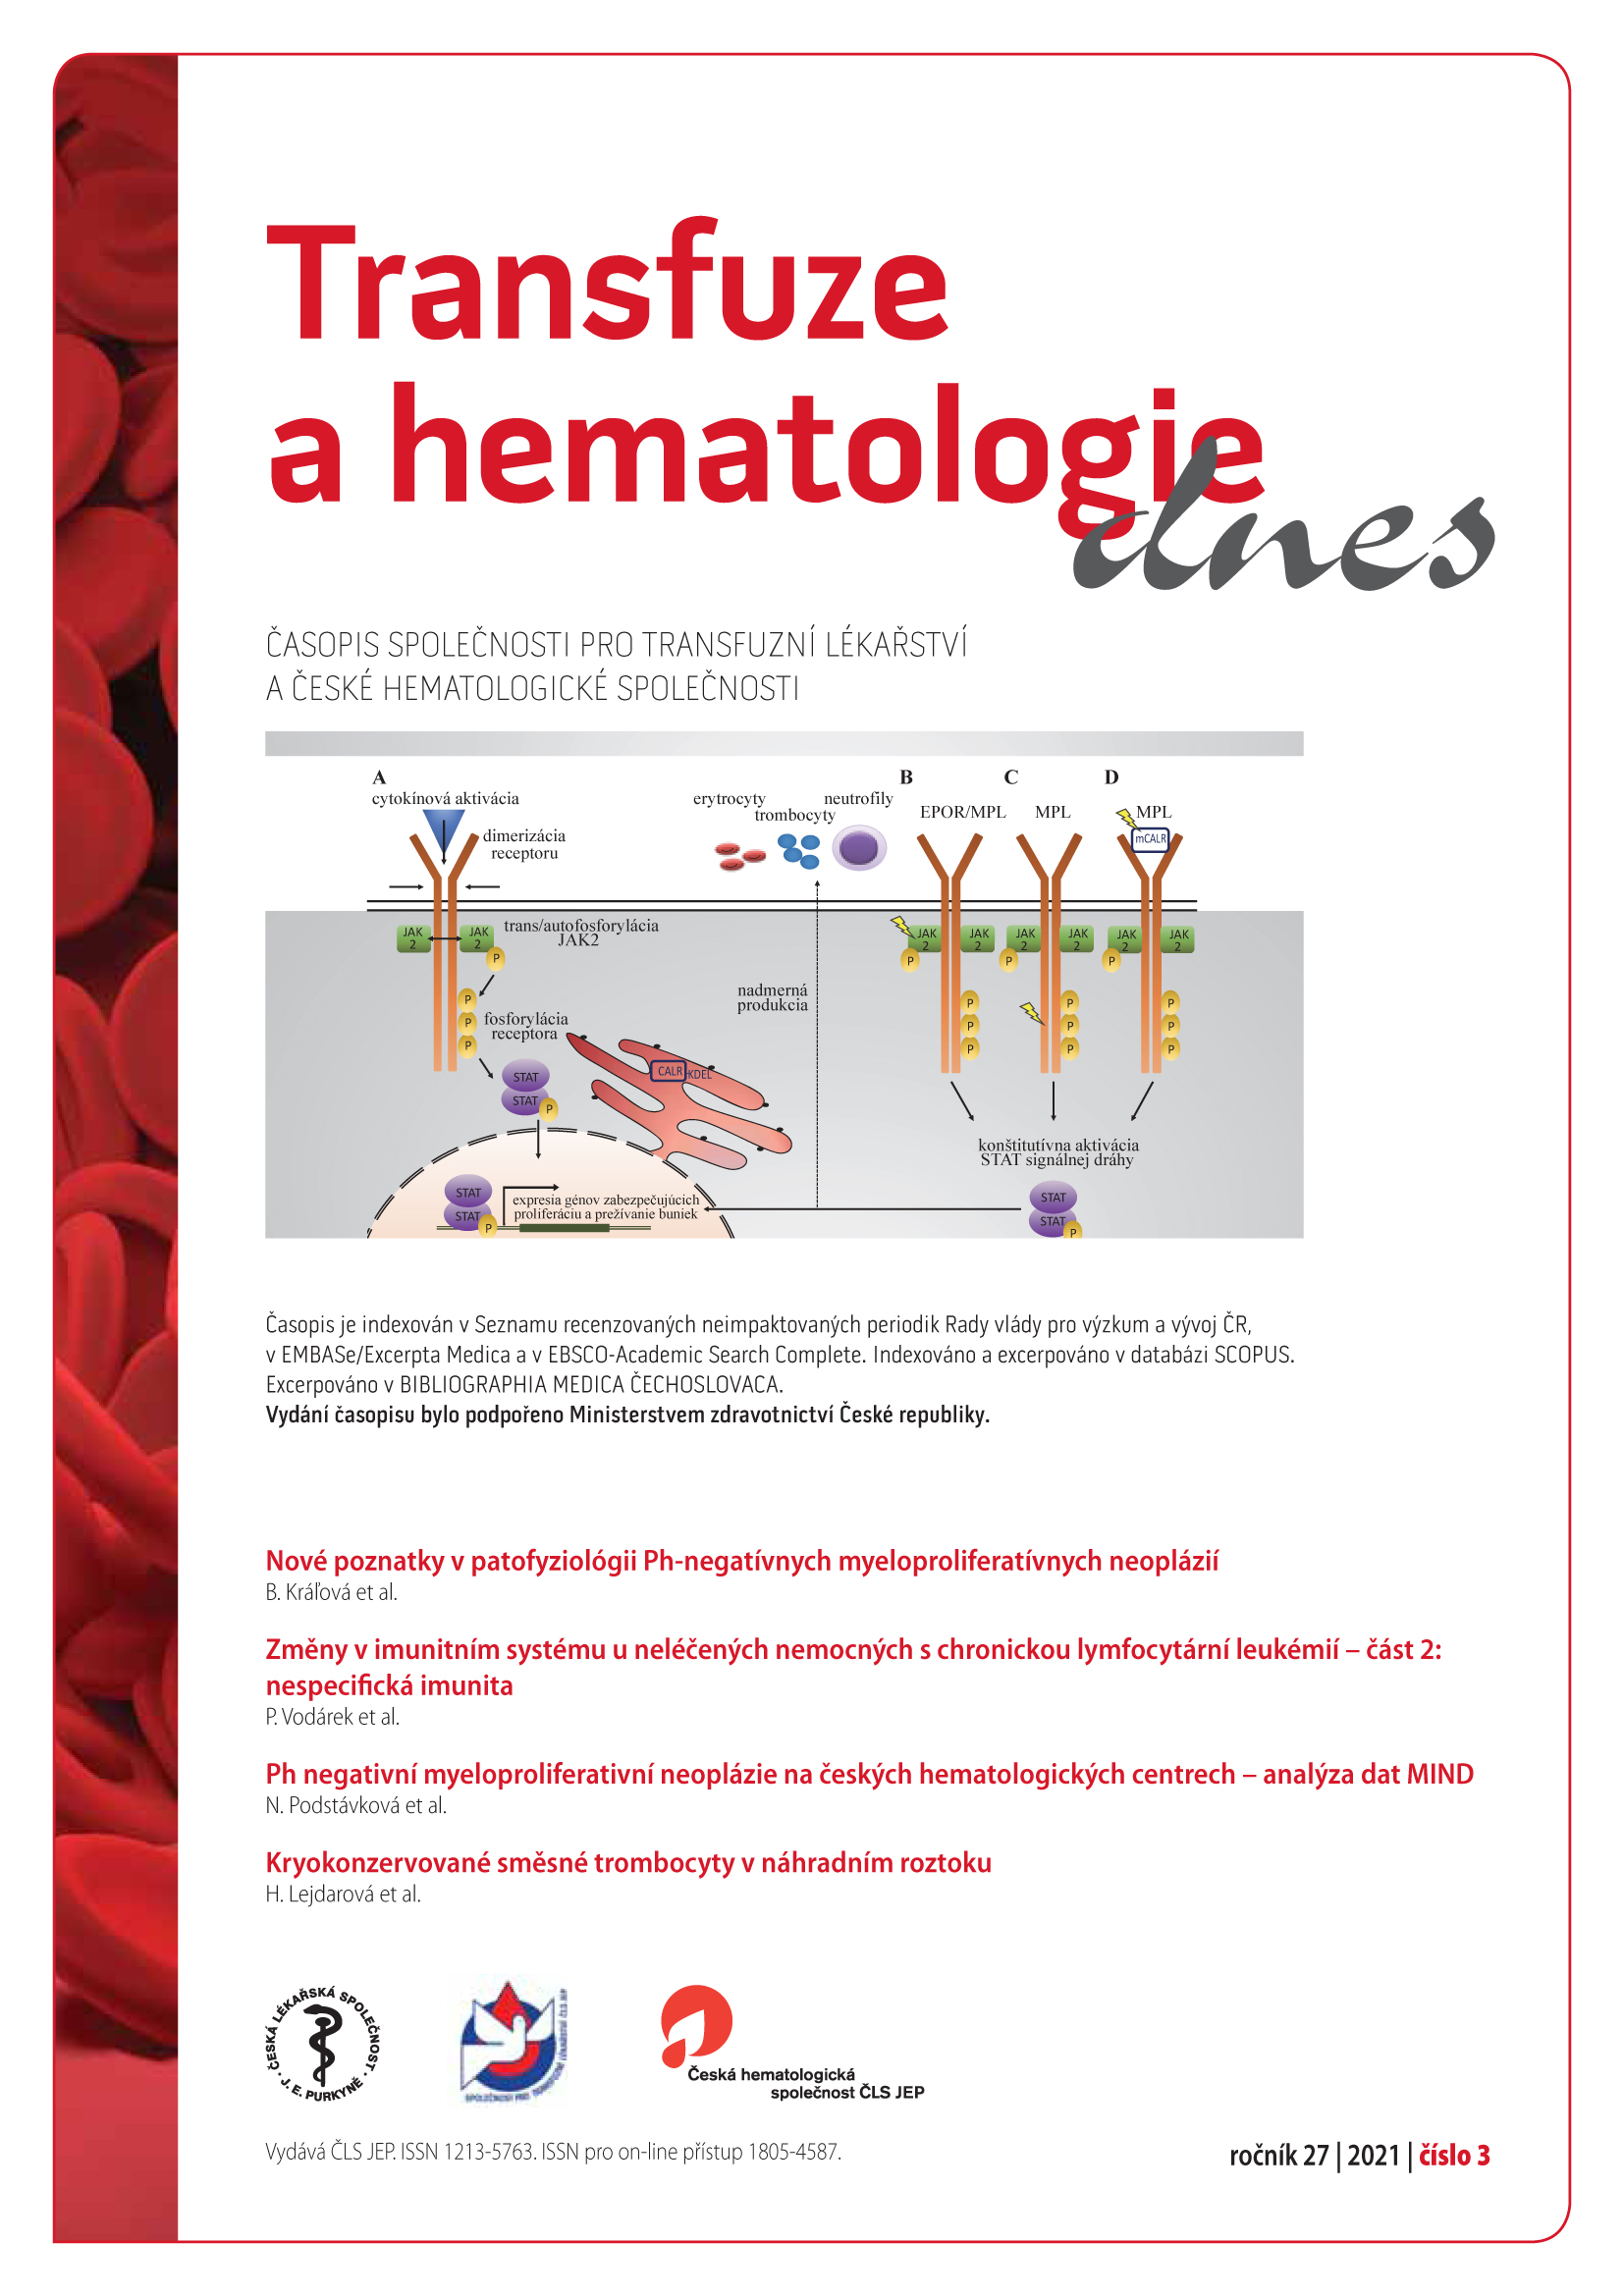 					Náhled Vol 27 No 3 (2021): Transfuze a hematologie dnes
				